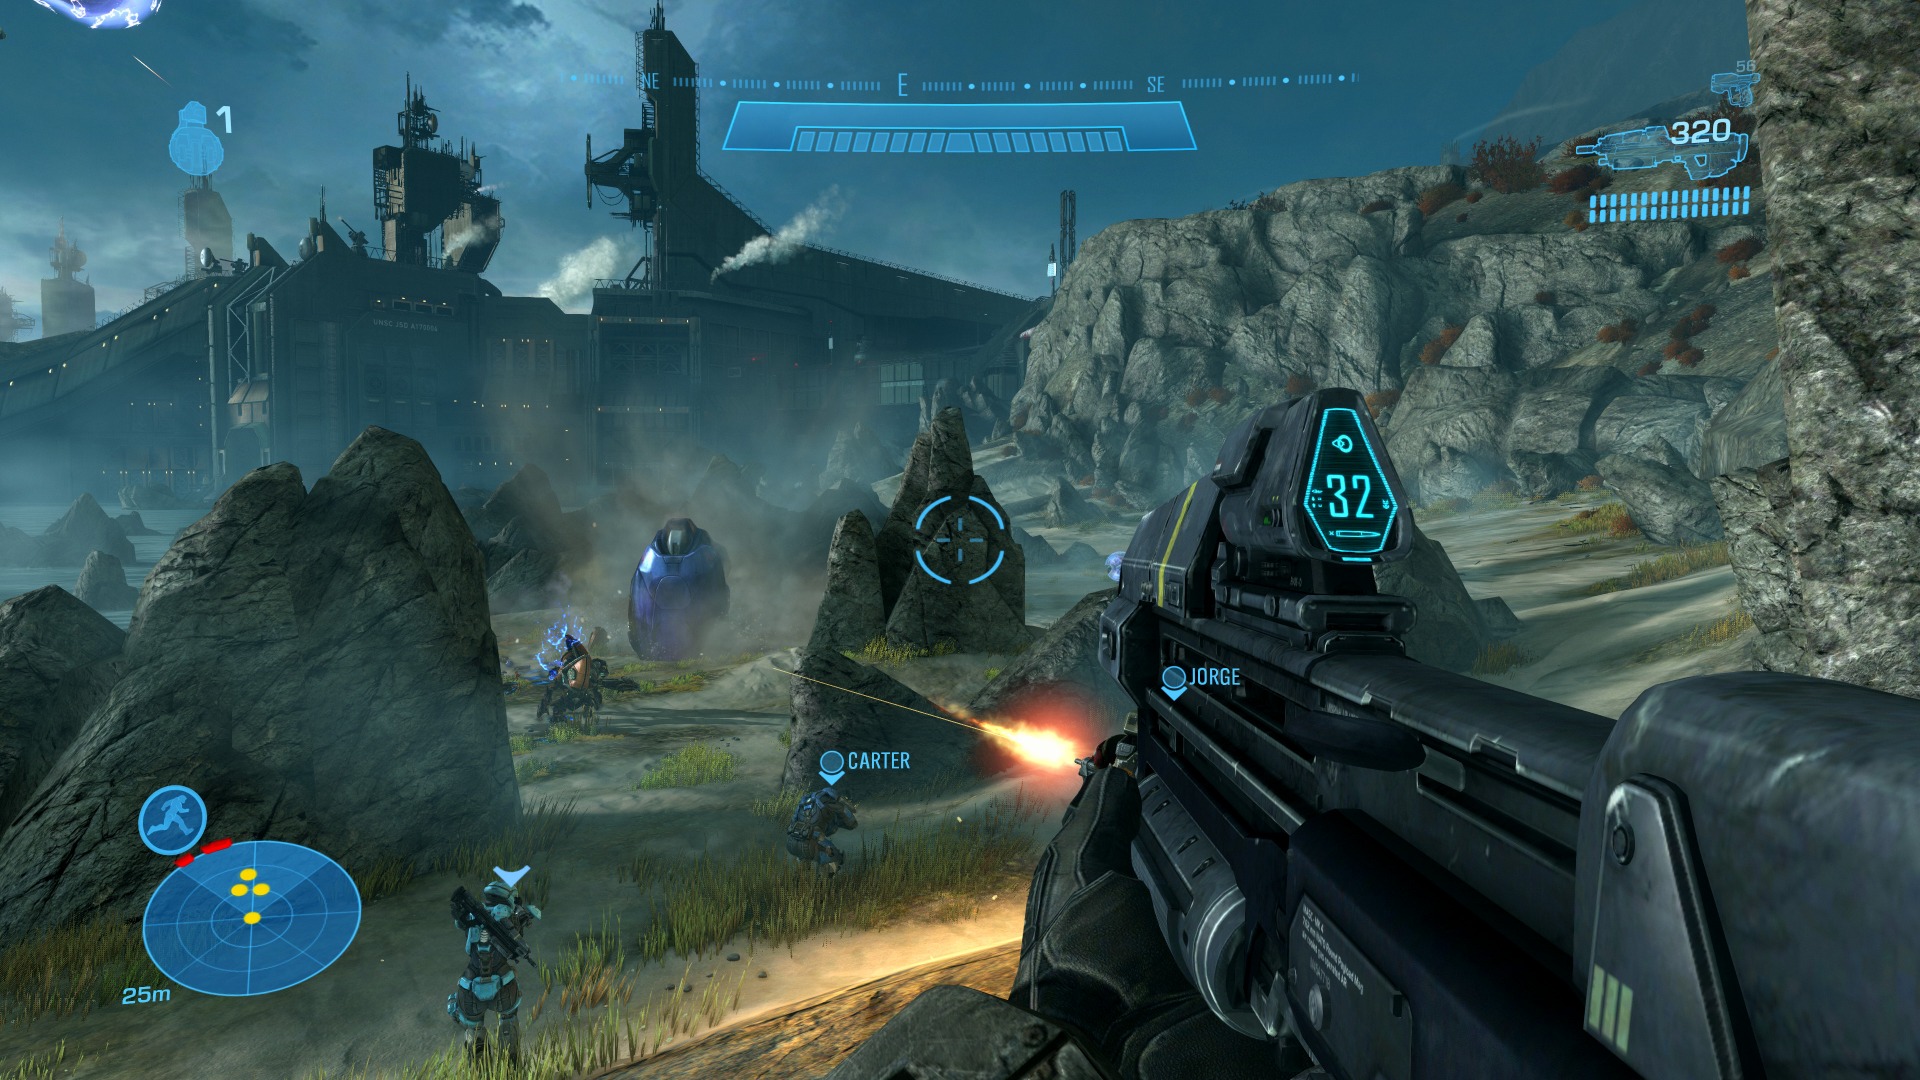 Pc Xbox One版 Halo Reach がついに発売 Steamでは同時接続数が15万人を超え Counter Strike Global Offensive と Dota 2 に次ぐ第3位に